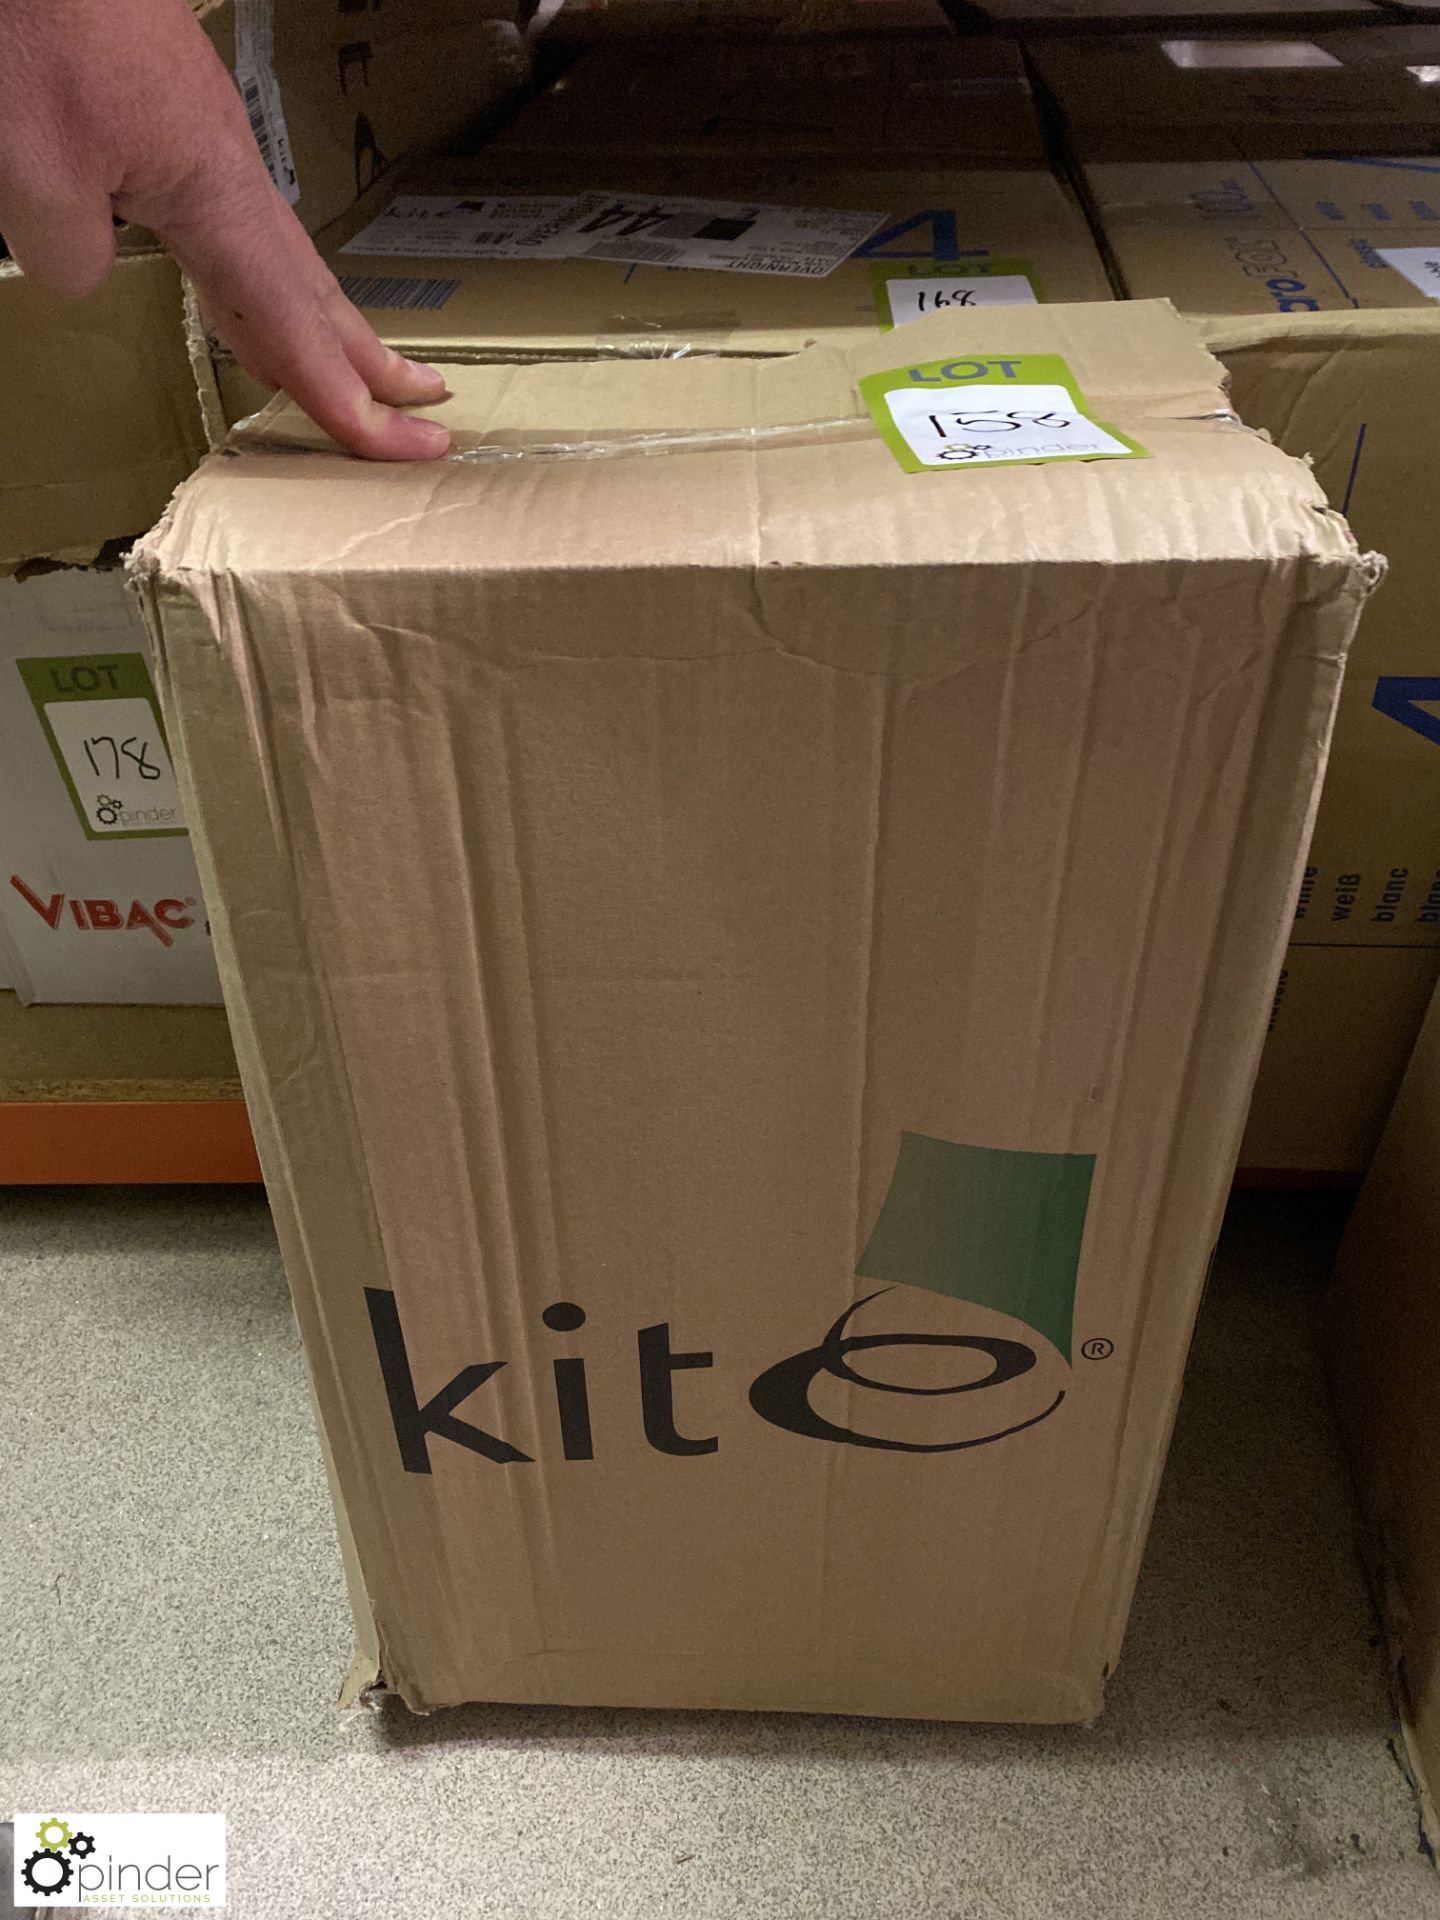 2 boxes Kite black Stretch Wrap, 17m, 6 rolls per box - Image 3 of 4